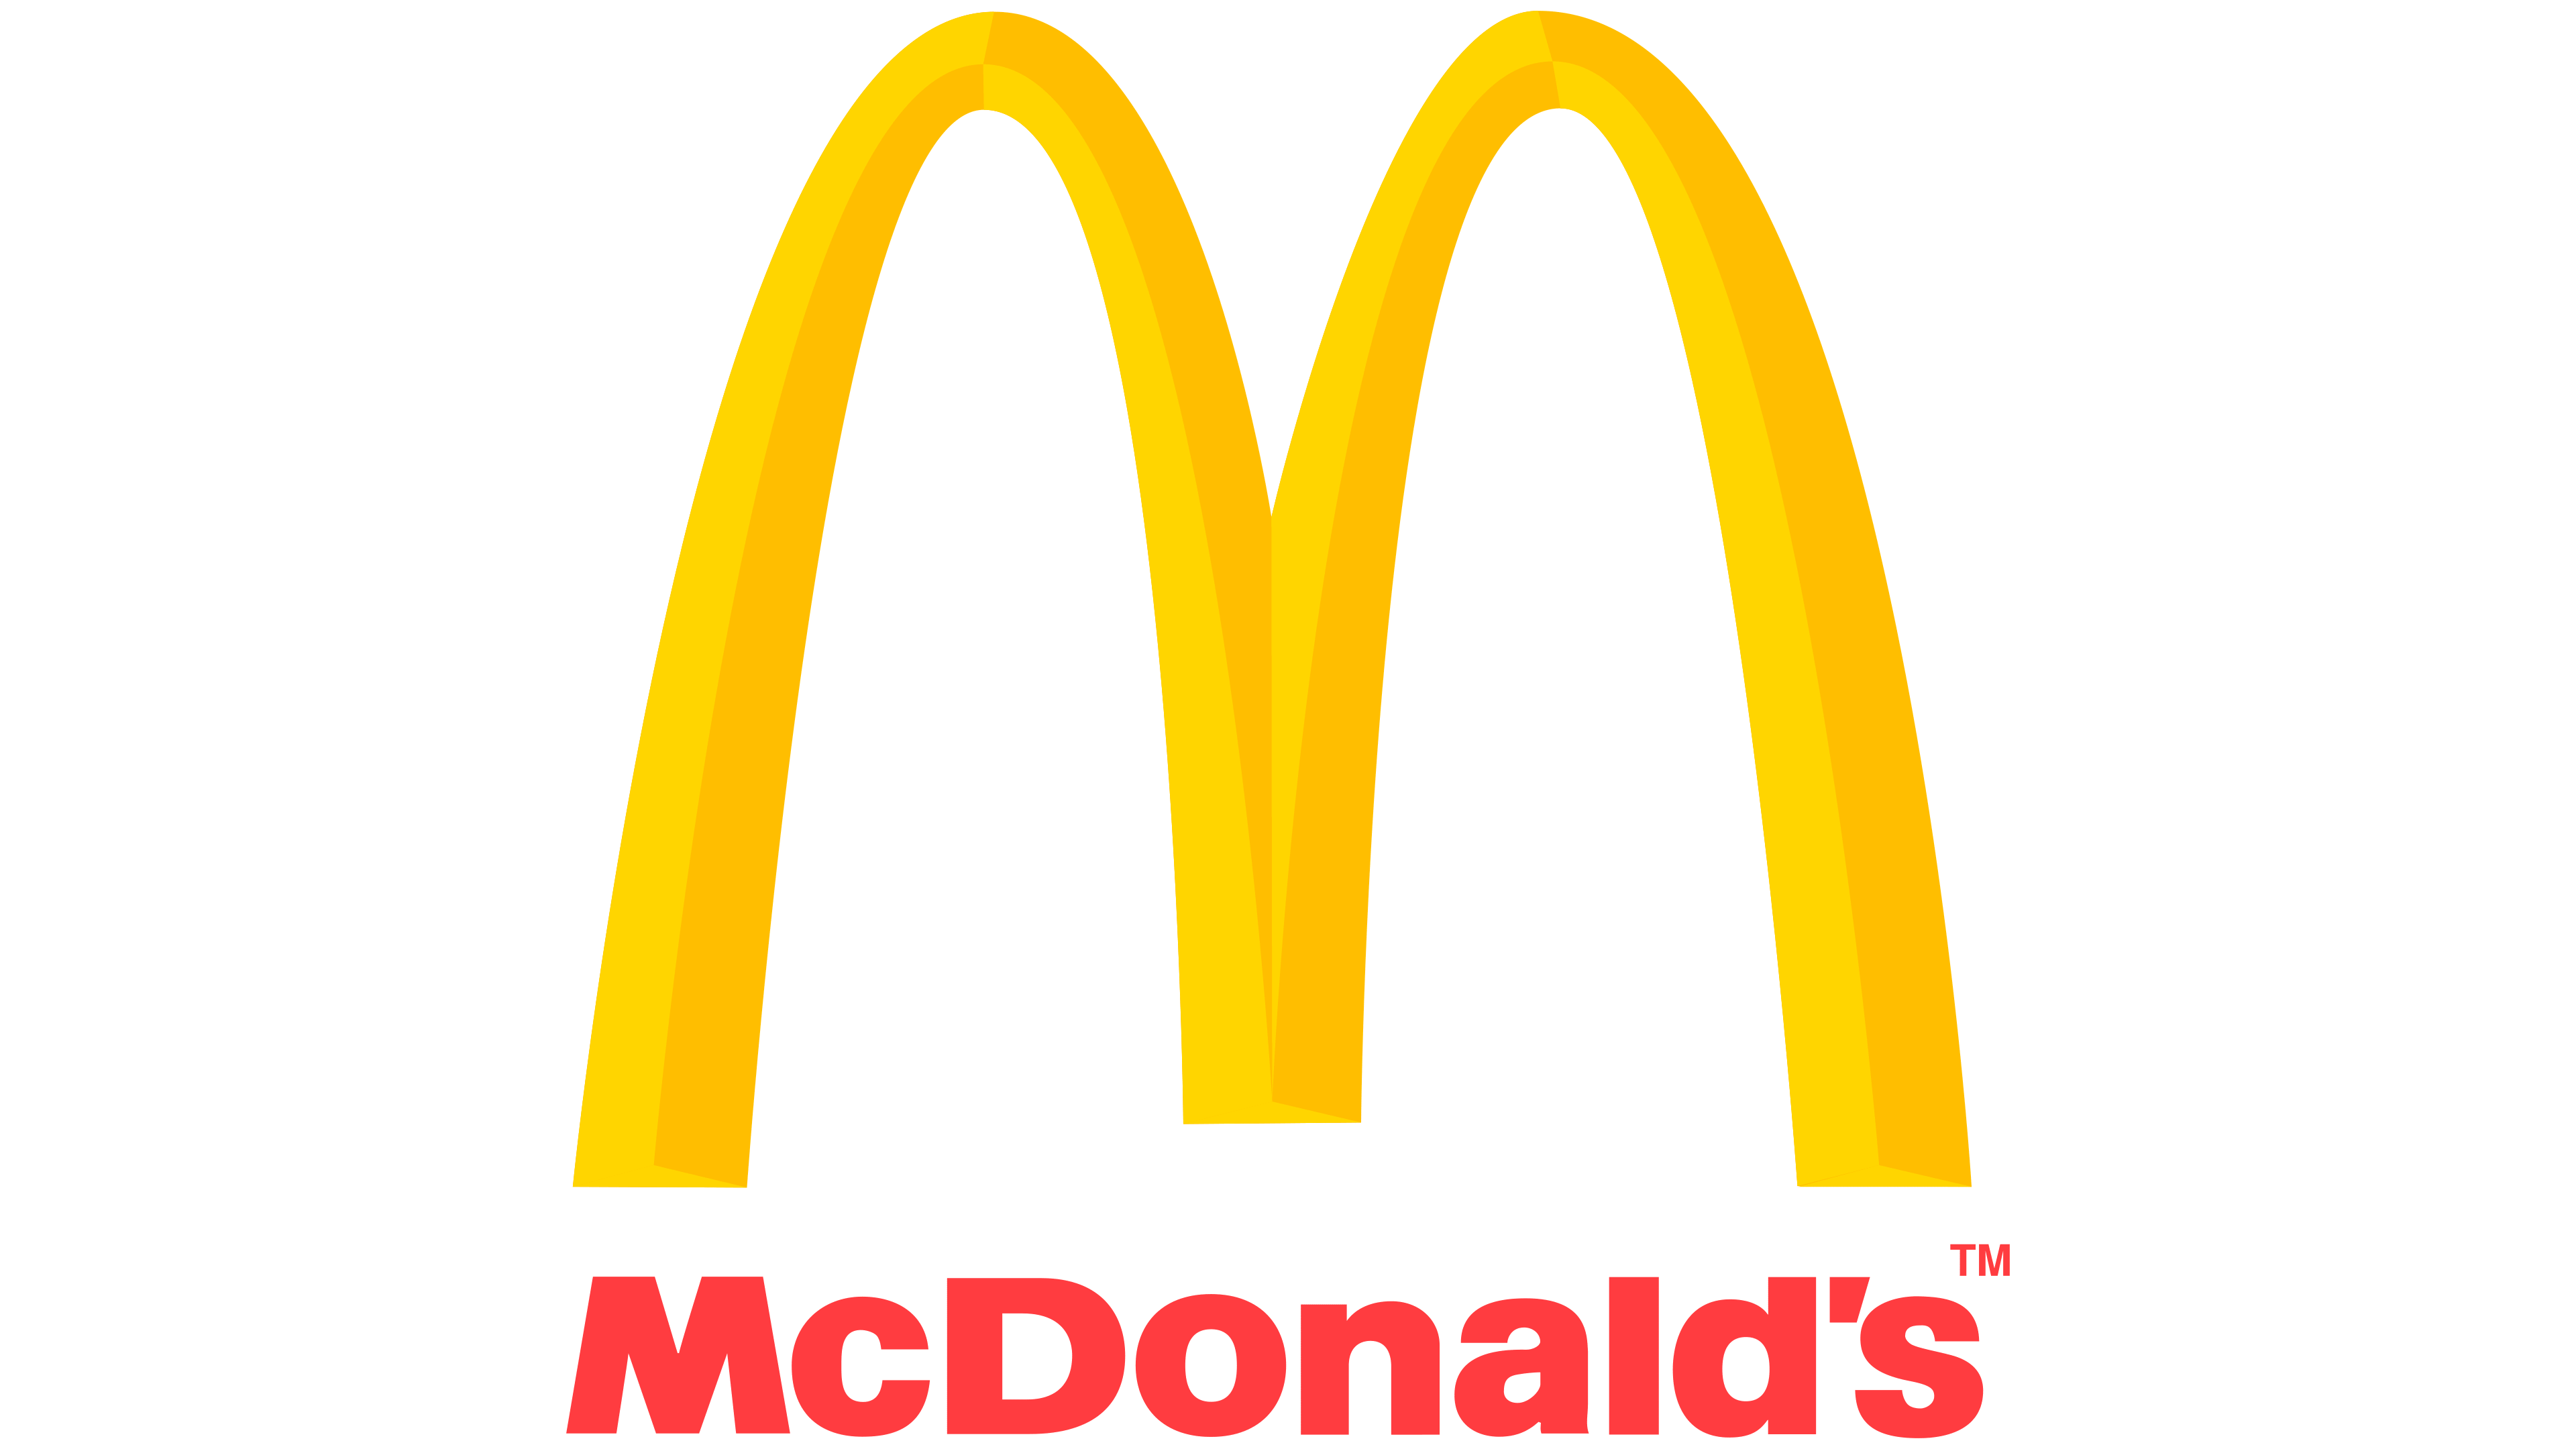 Mcdonald s logo. Макдональдс лого 2021. Макдональдс без фона. Макдональдс логотип 2020. Логотип Макдоналдс на белом фоне.